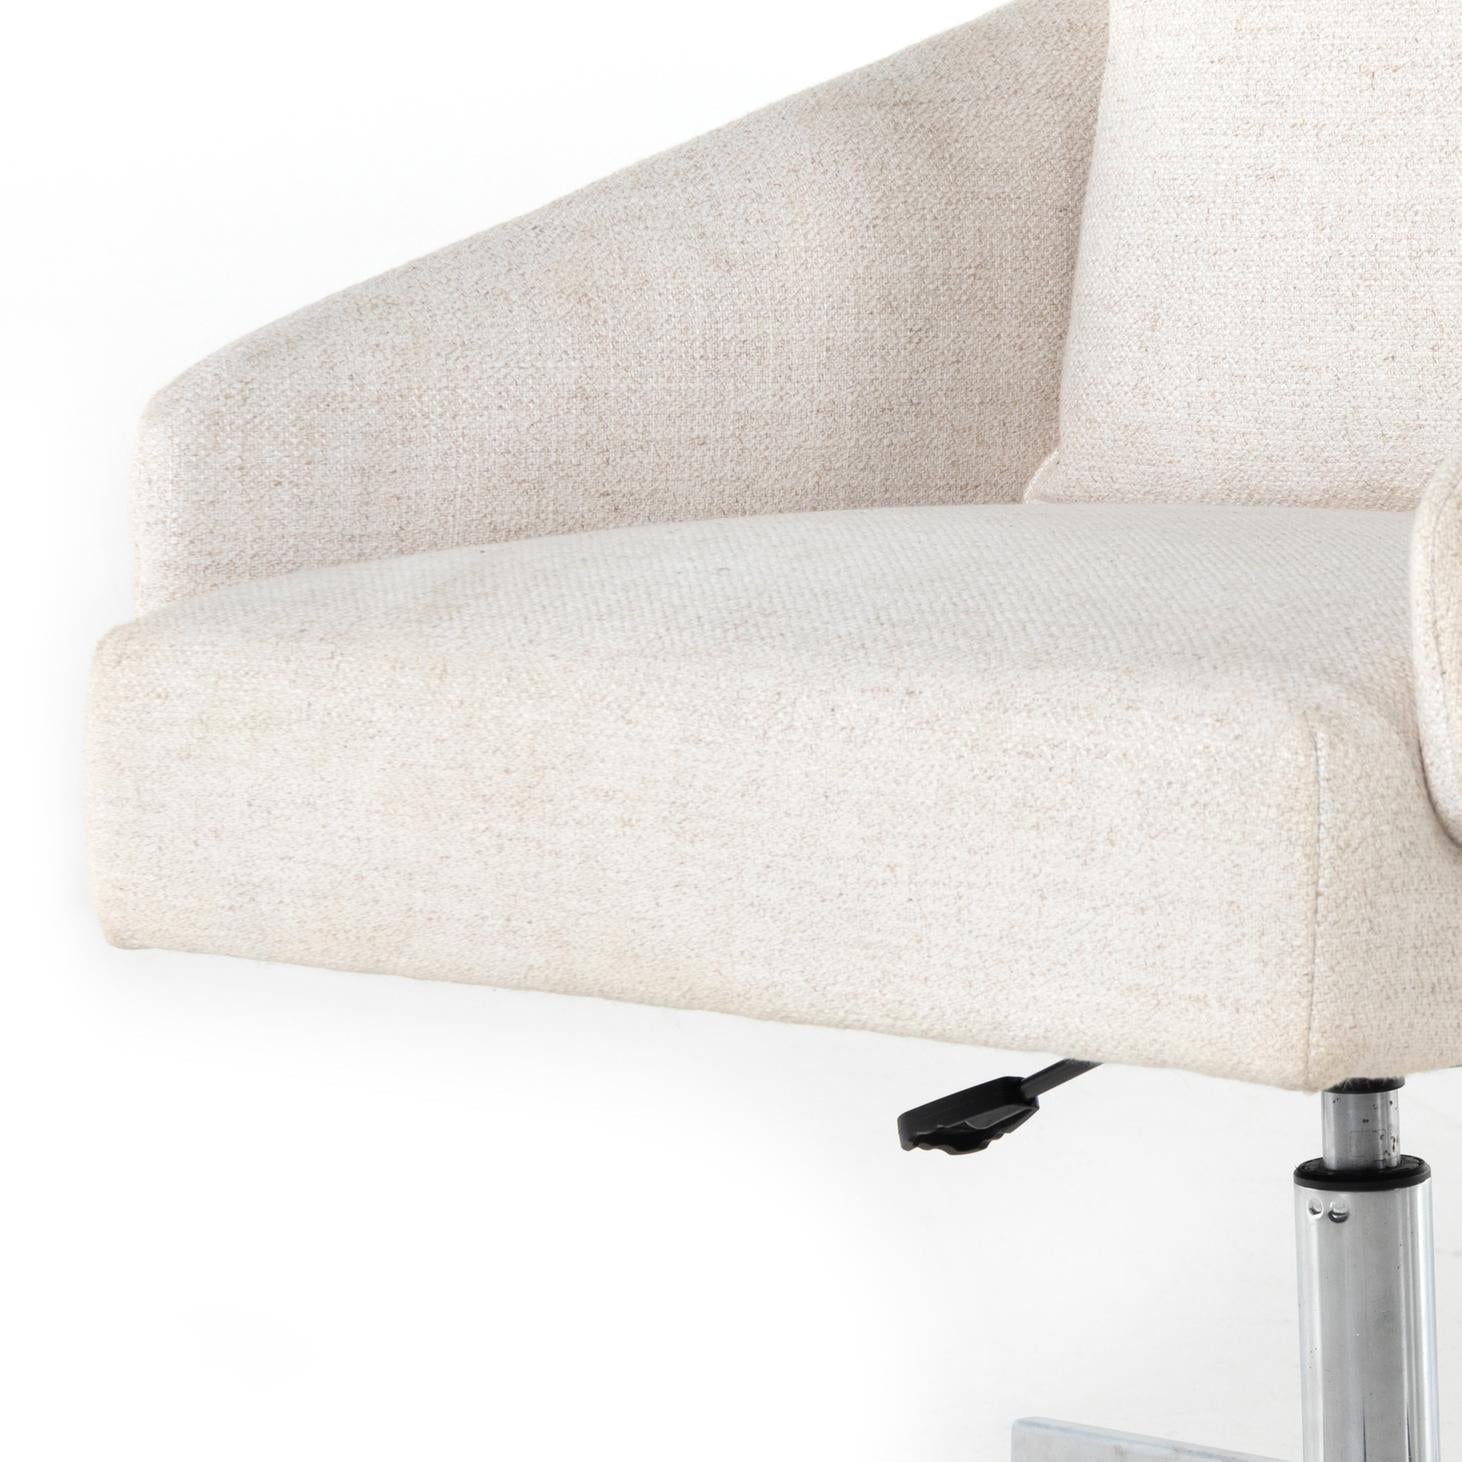 Winona Desk Chair - StyleMeGHD - Modern Home Decor